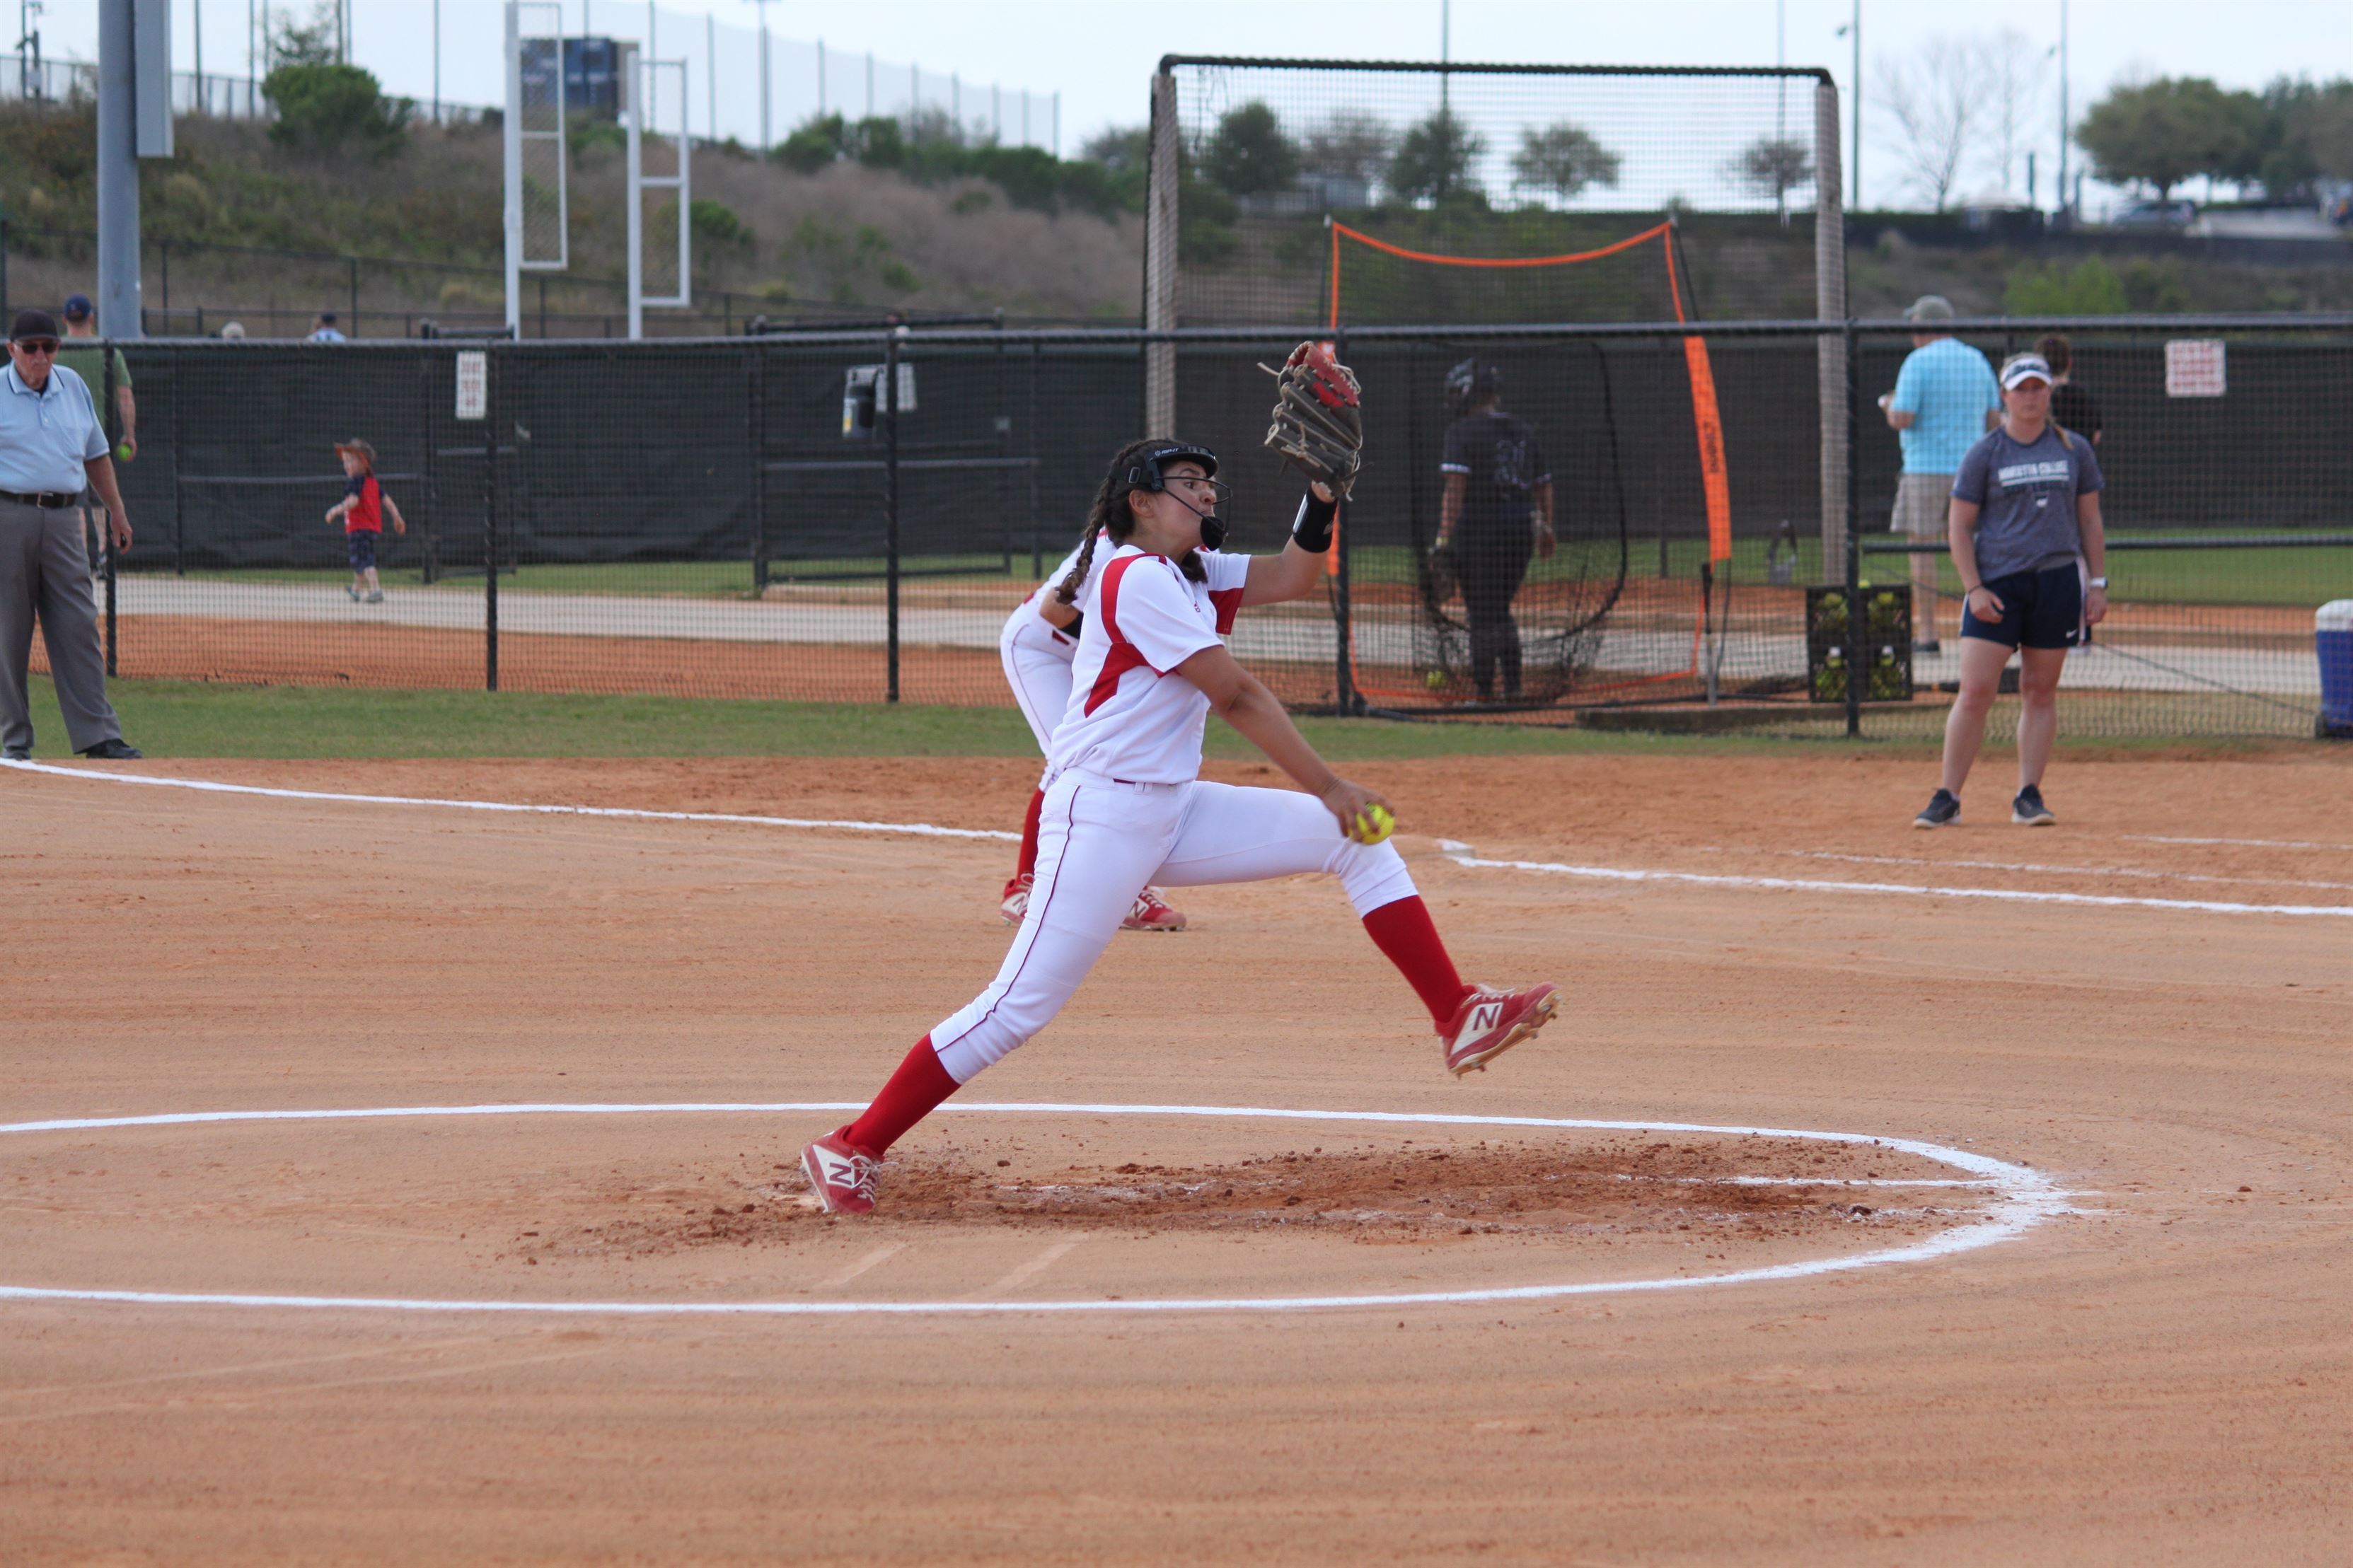 Kiara Ruiz winds up for a pitch. Photo courtesy of Kiara Ruiz